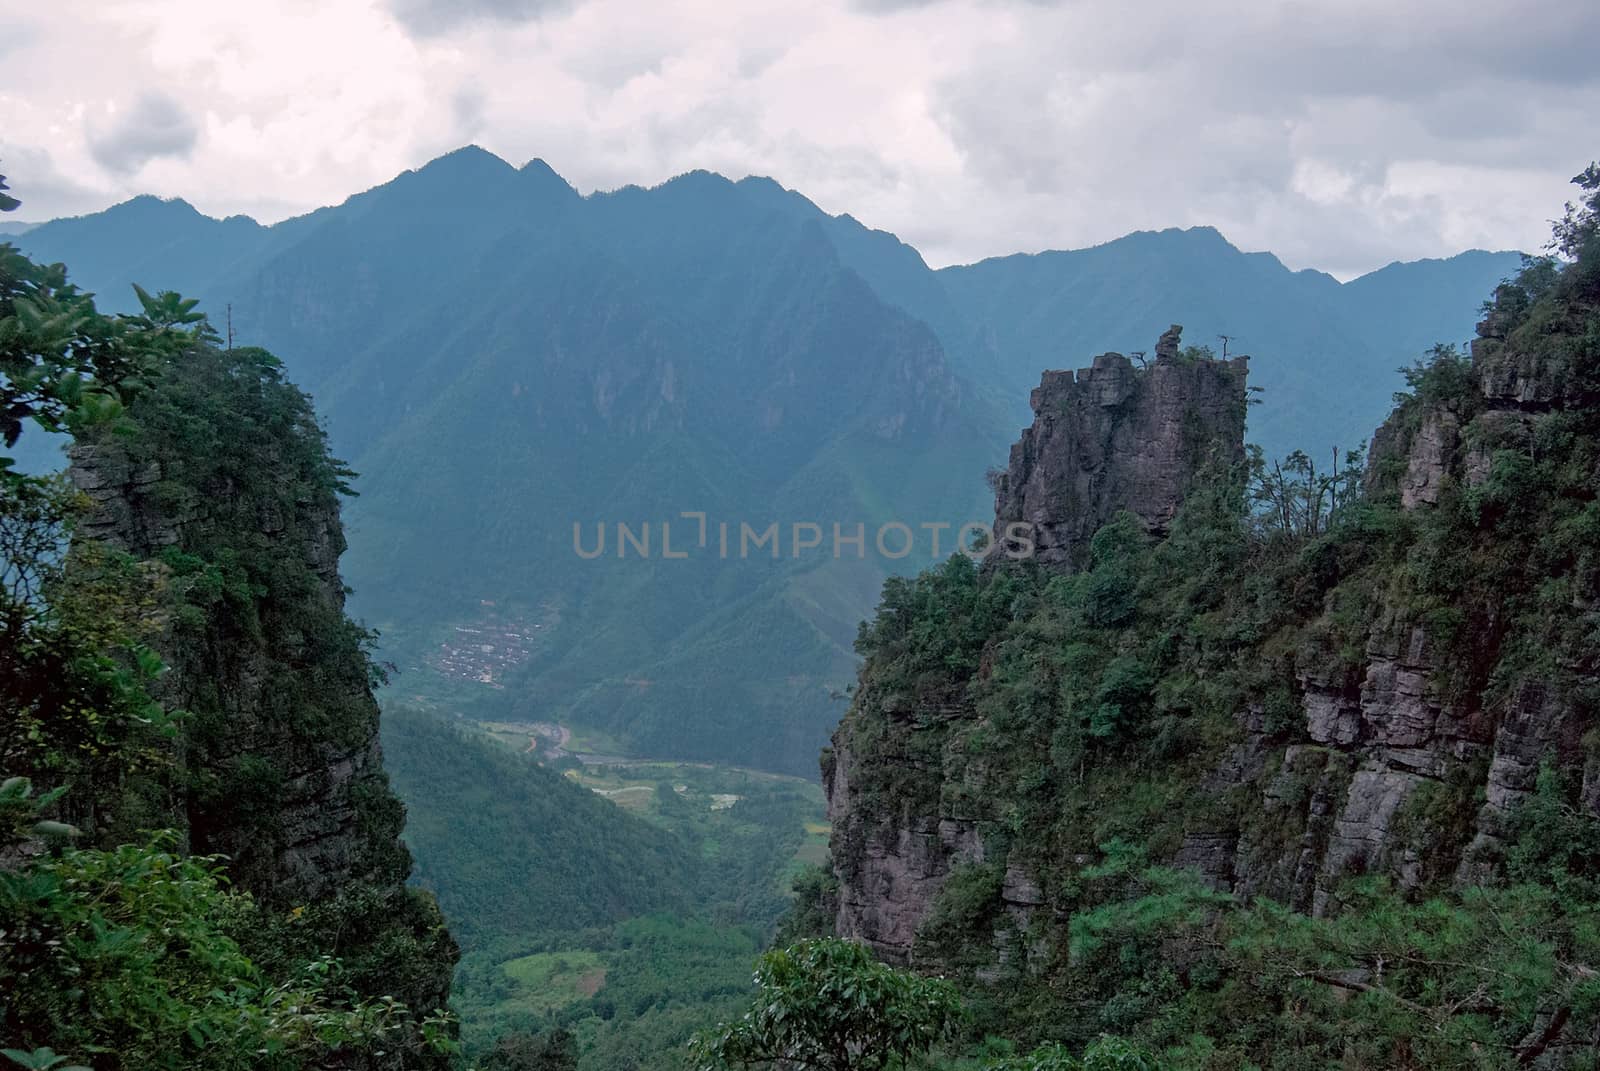 Beautiful views of Lianhua Mountain by xfdly5